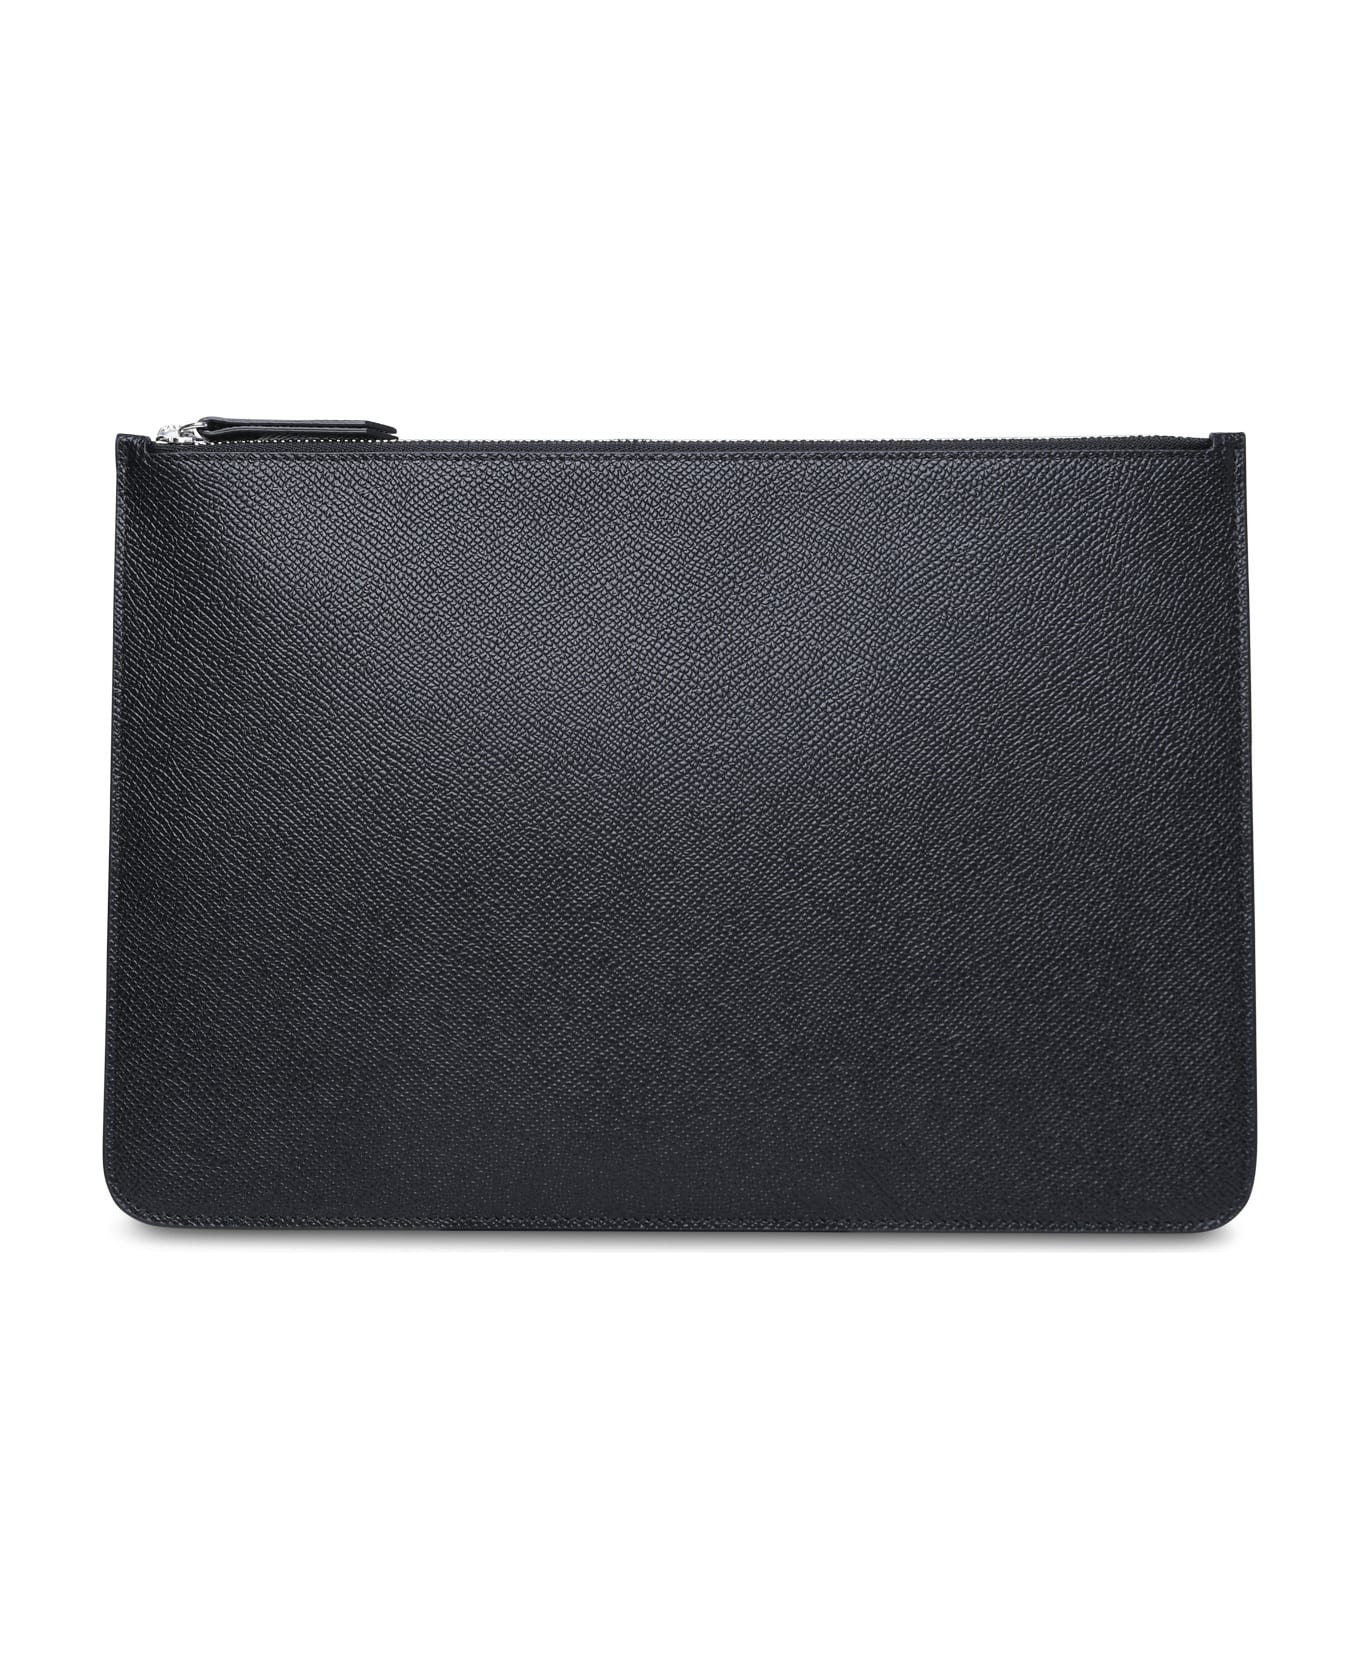 Maison Margiela Black Leather Clutch Bag - Black